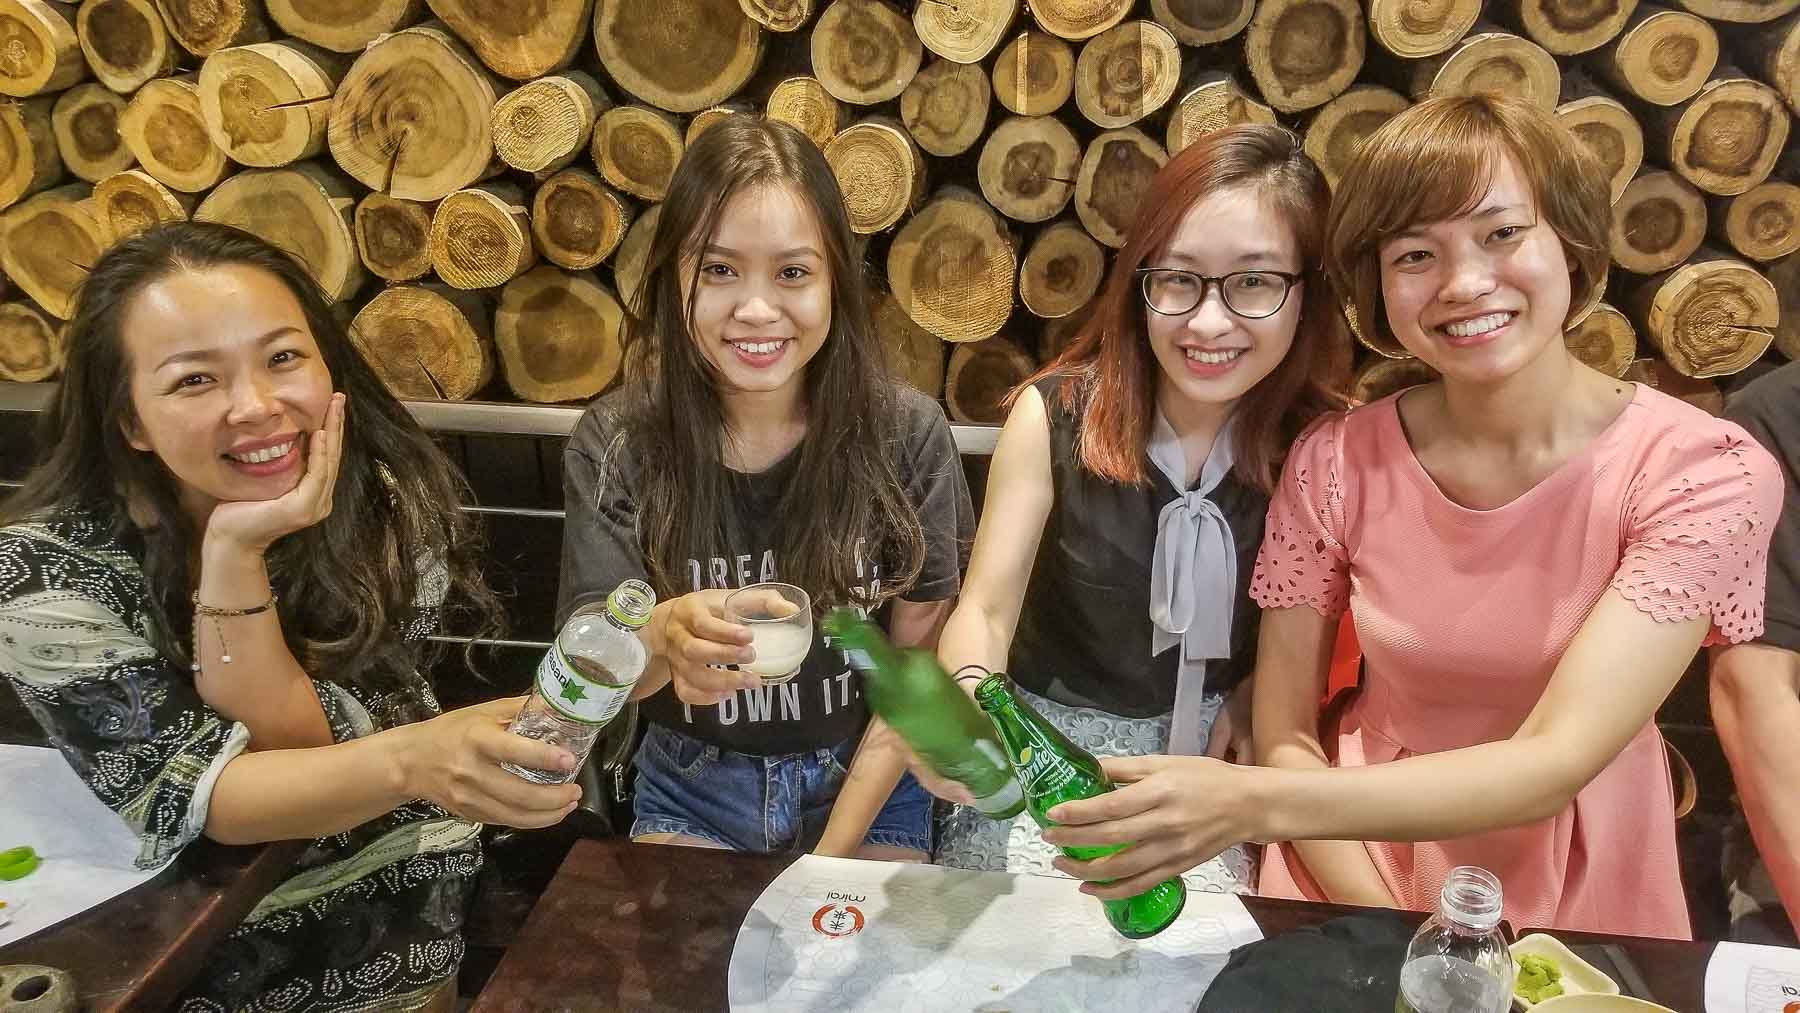 I Wanna Be a Hanoi Tour Guide! Discussed at the Entrepreneur Social Club [tm] Thursday June 14, 2018 hosted by founder Michael Scott Novilla, Hanoi Vietnam